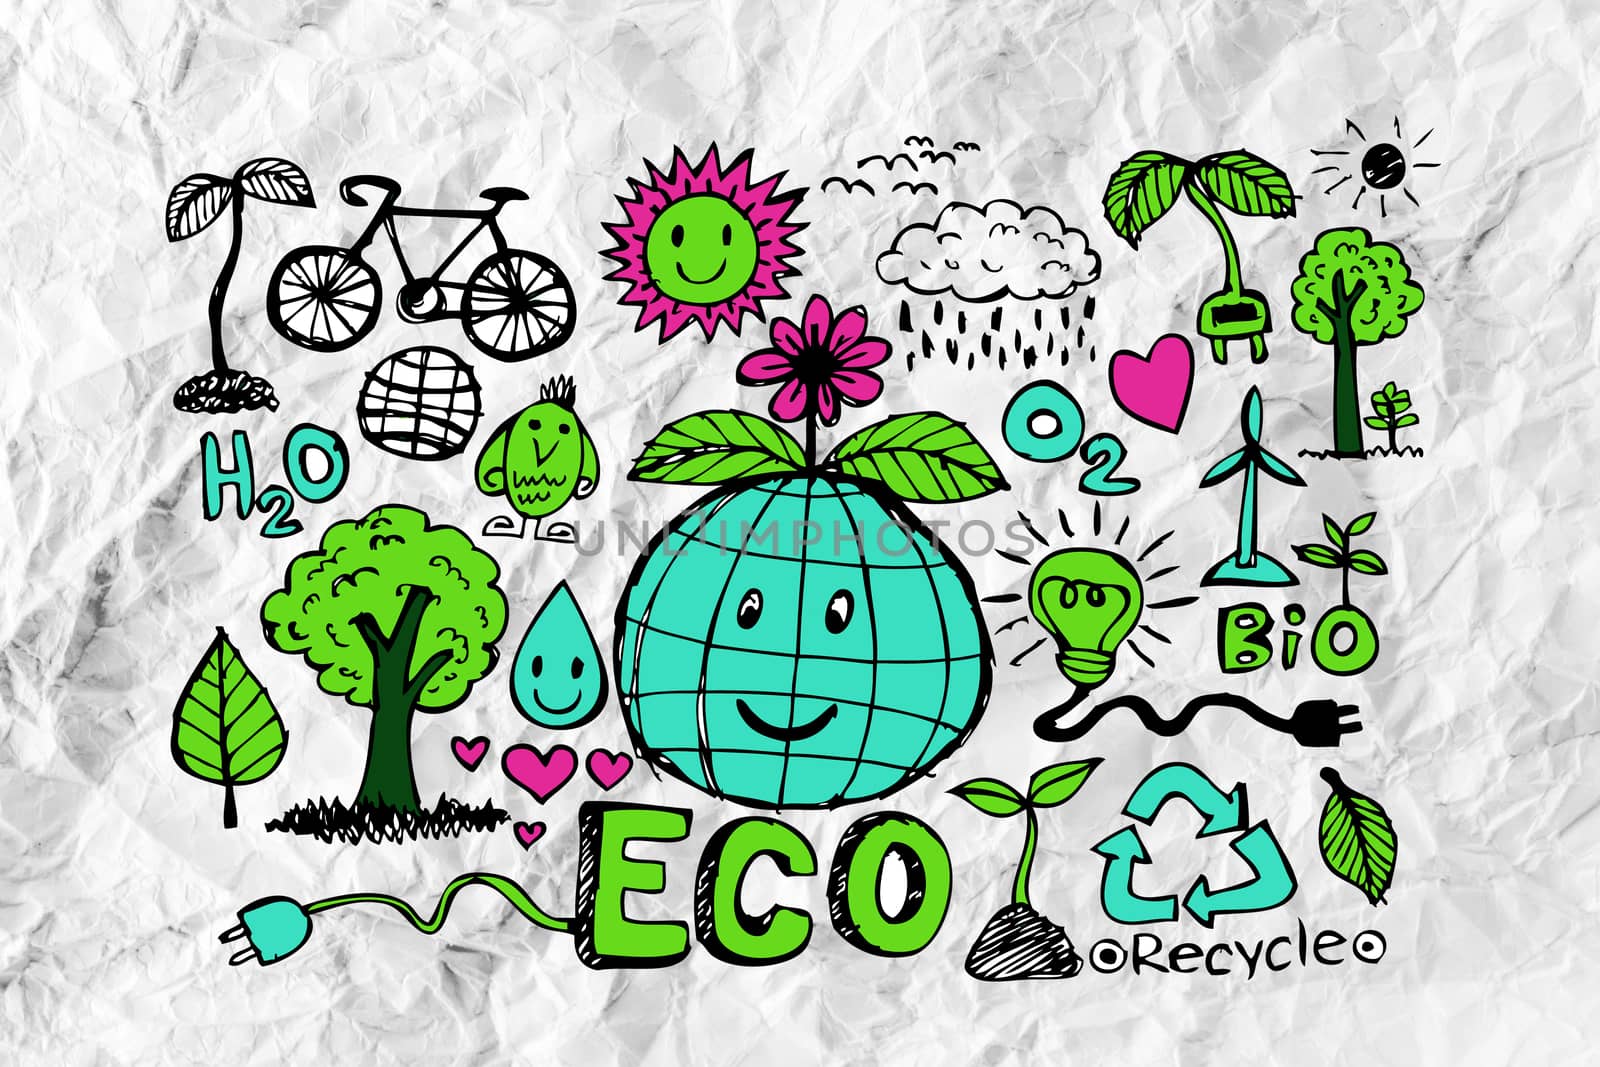 doodles ECO idea on crumpled paper by kiddaikiddee